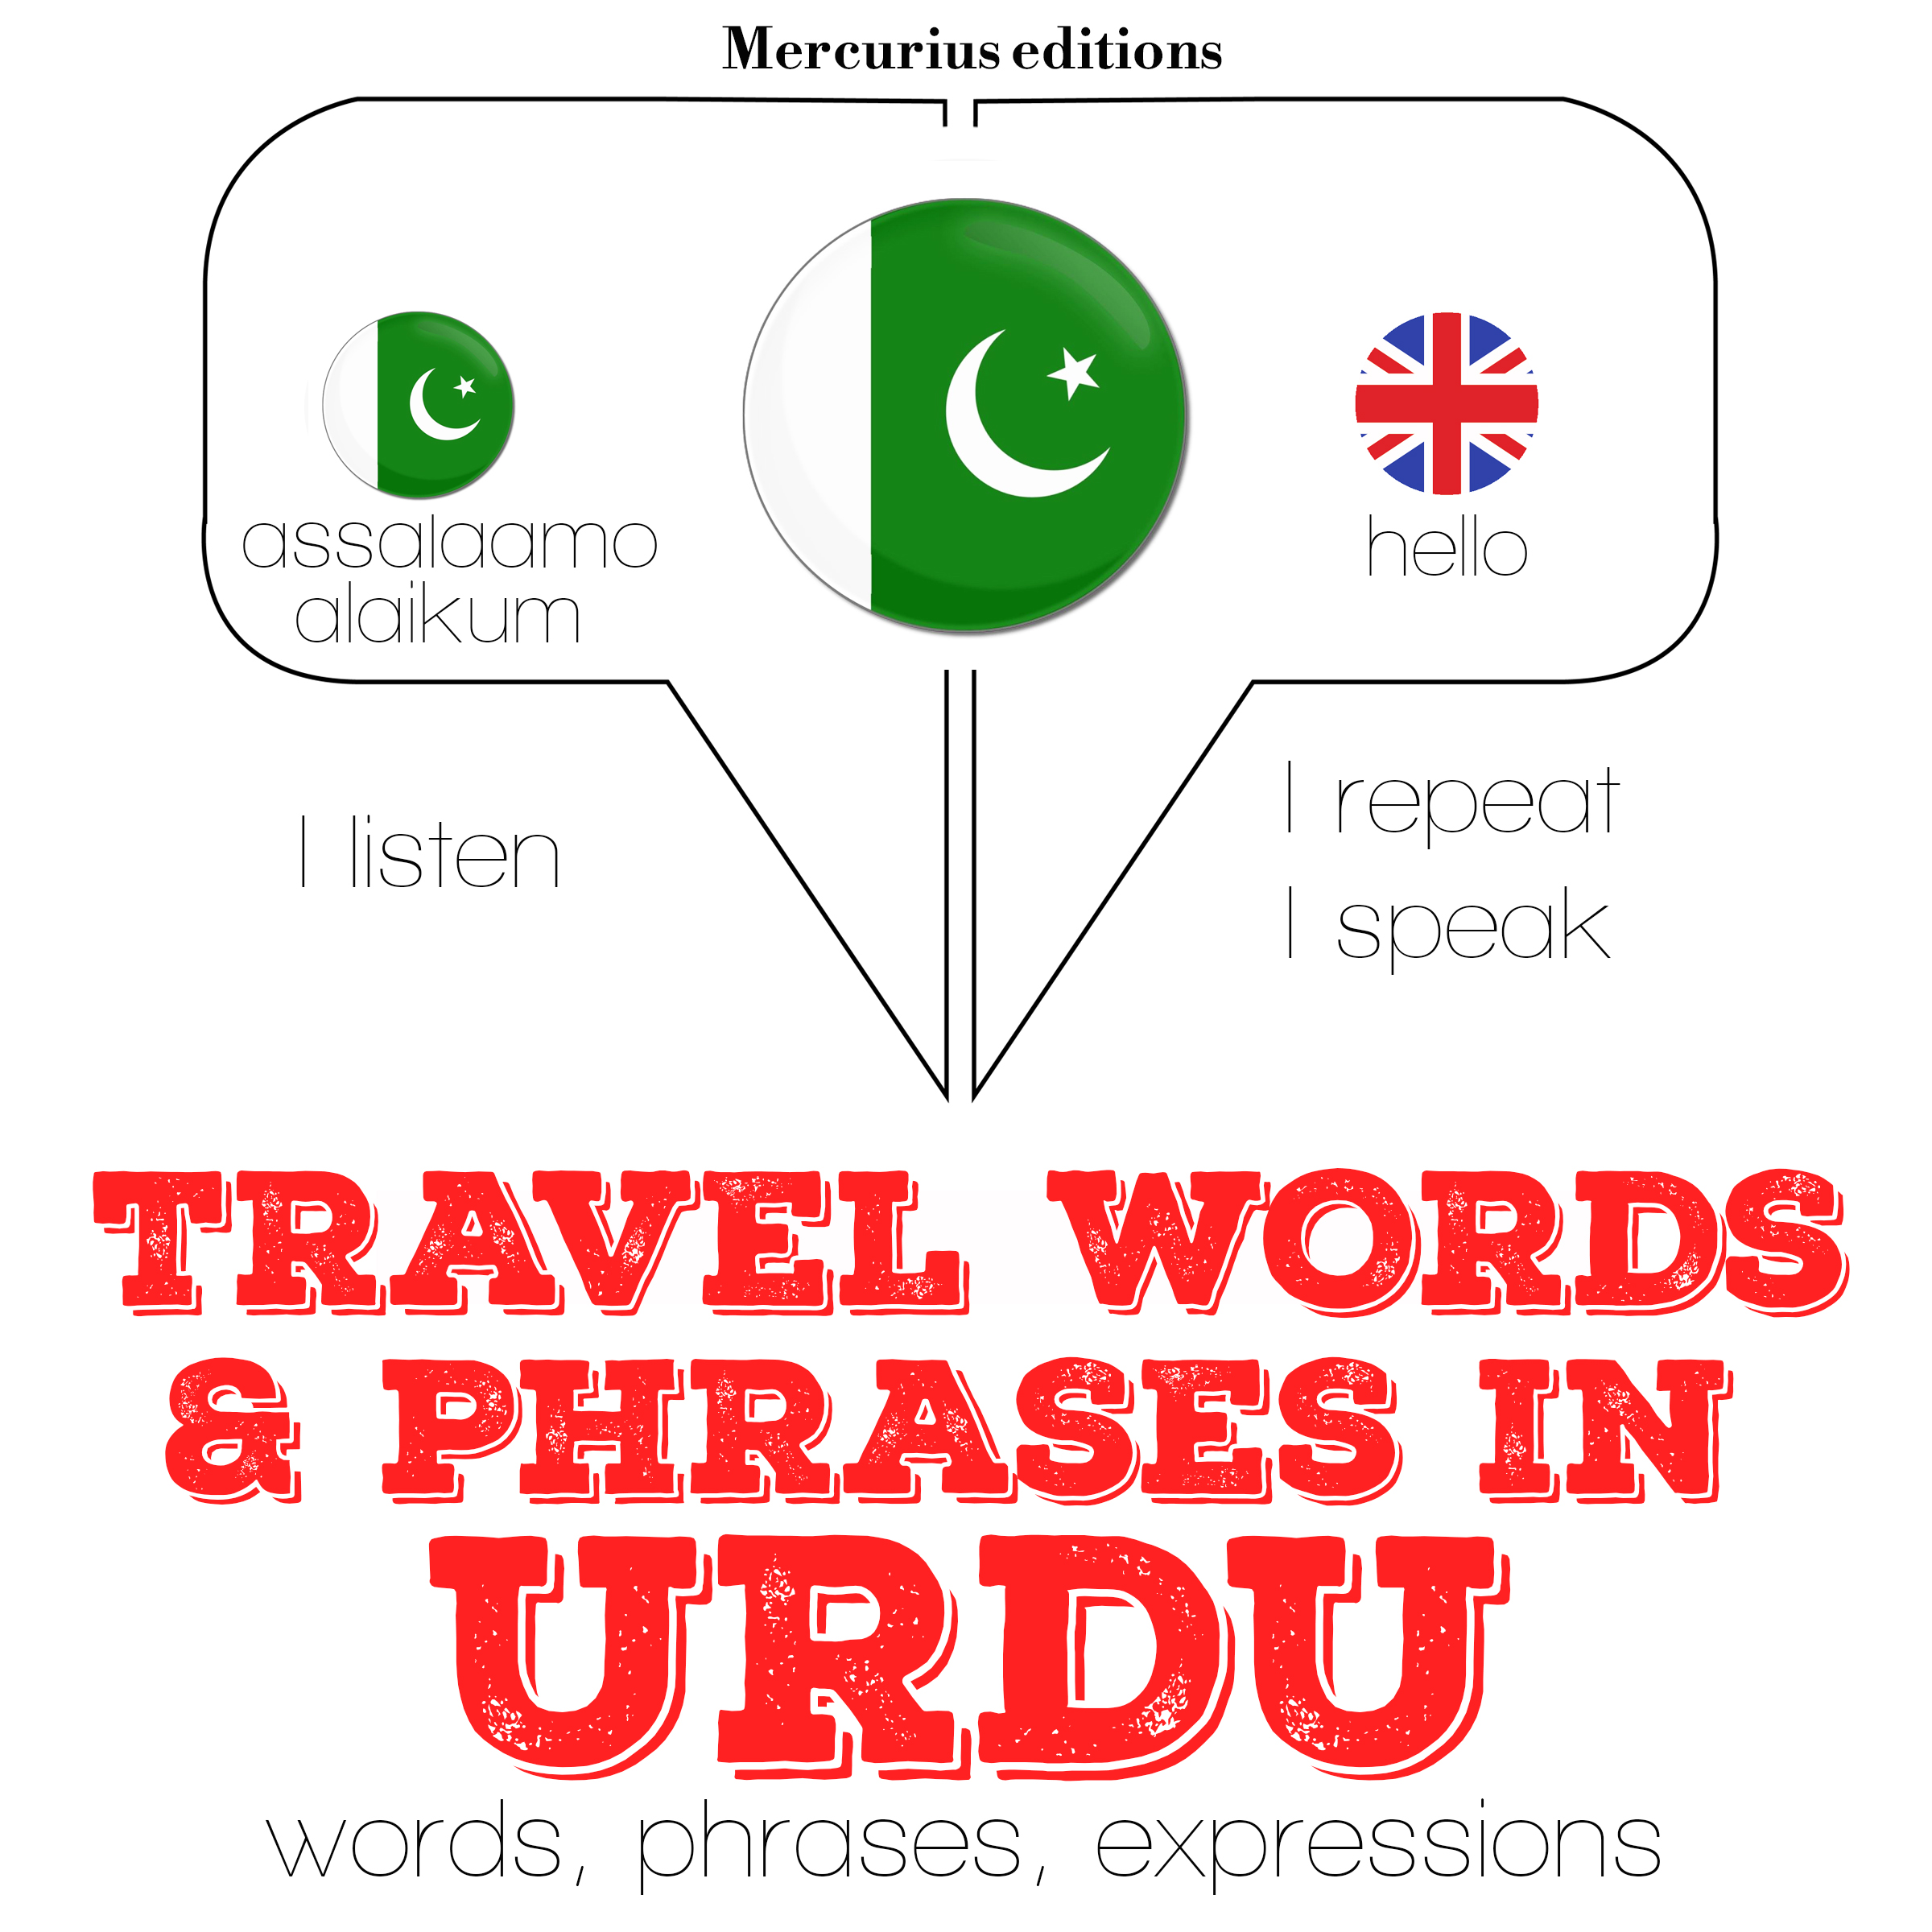 travelling reserves meaning in urdu